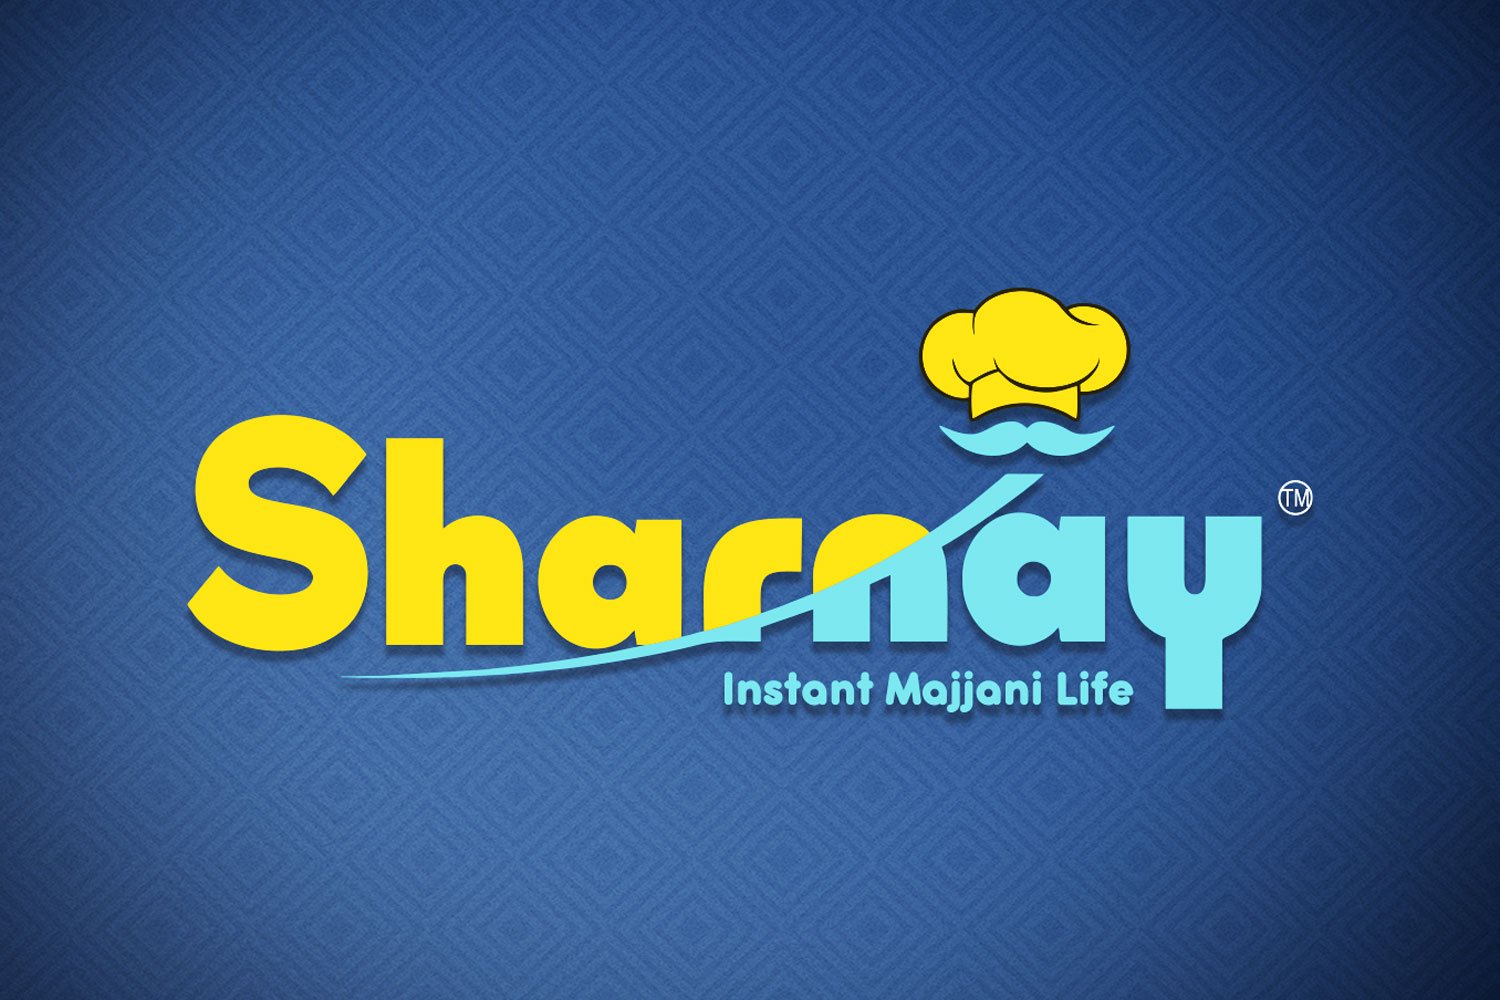 sharnay logo designing company